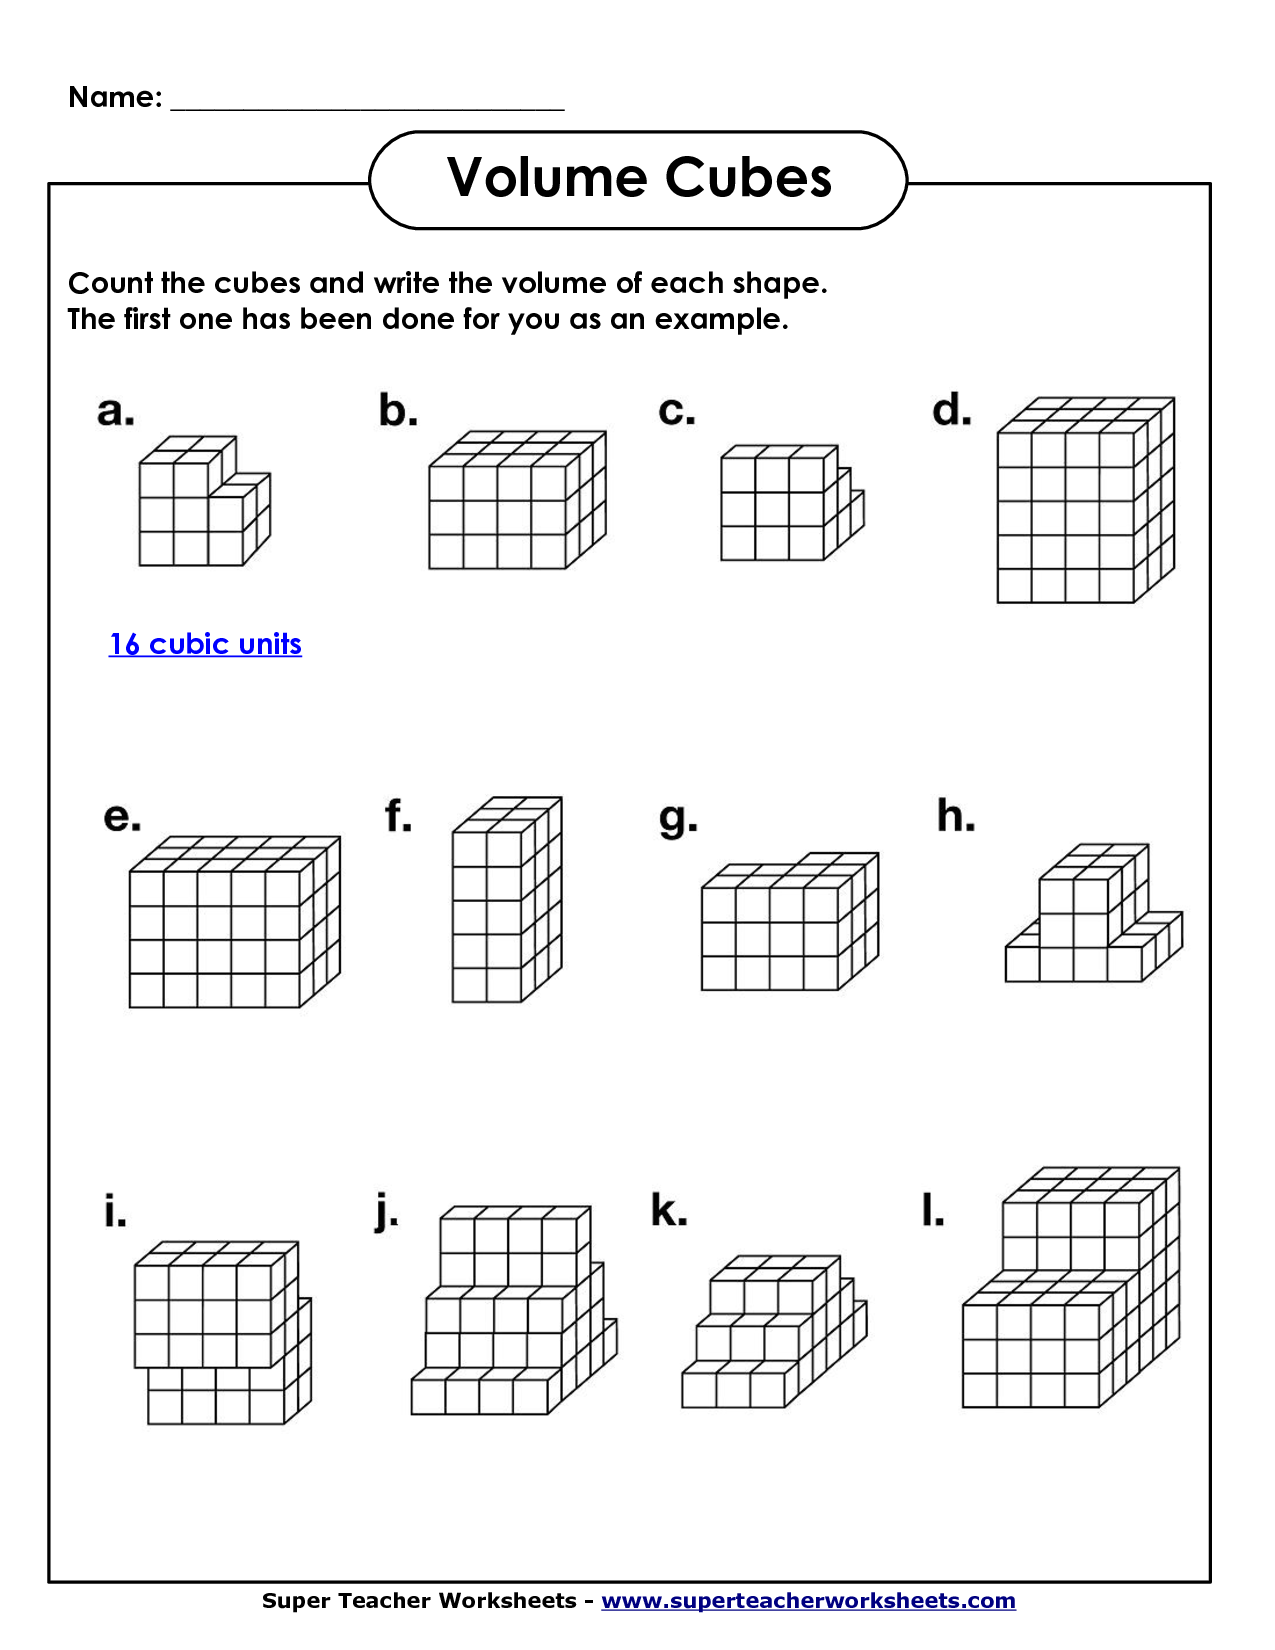 14 Images of Sound Worksheets For 5th Grade